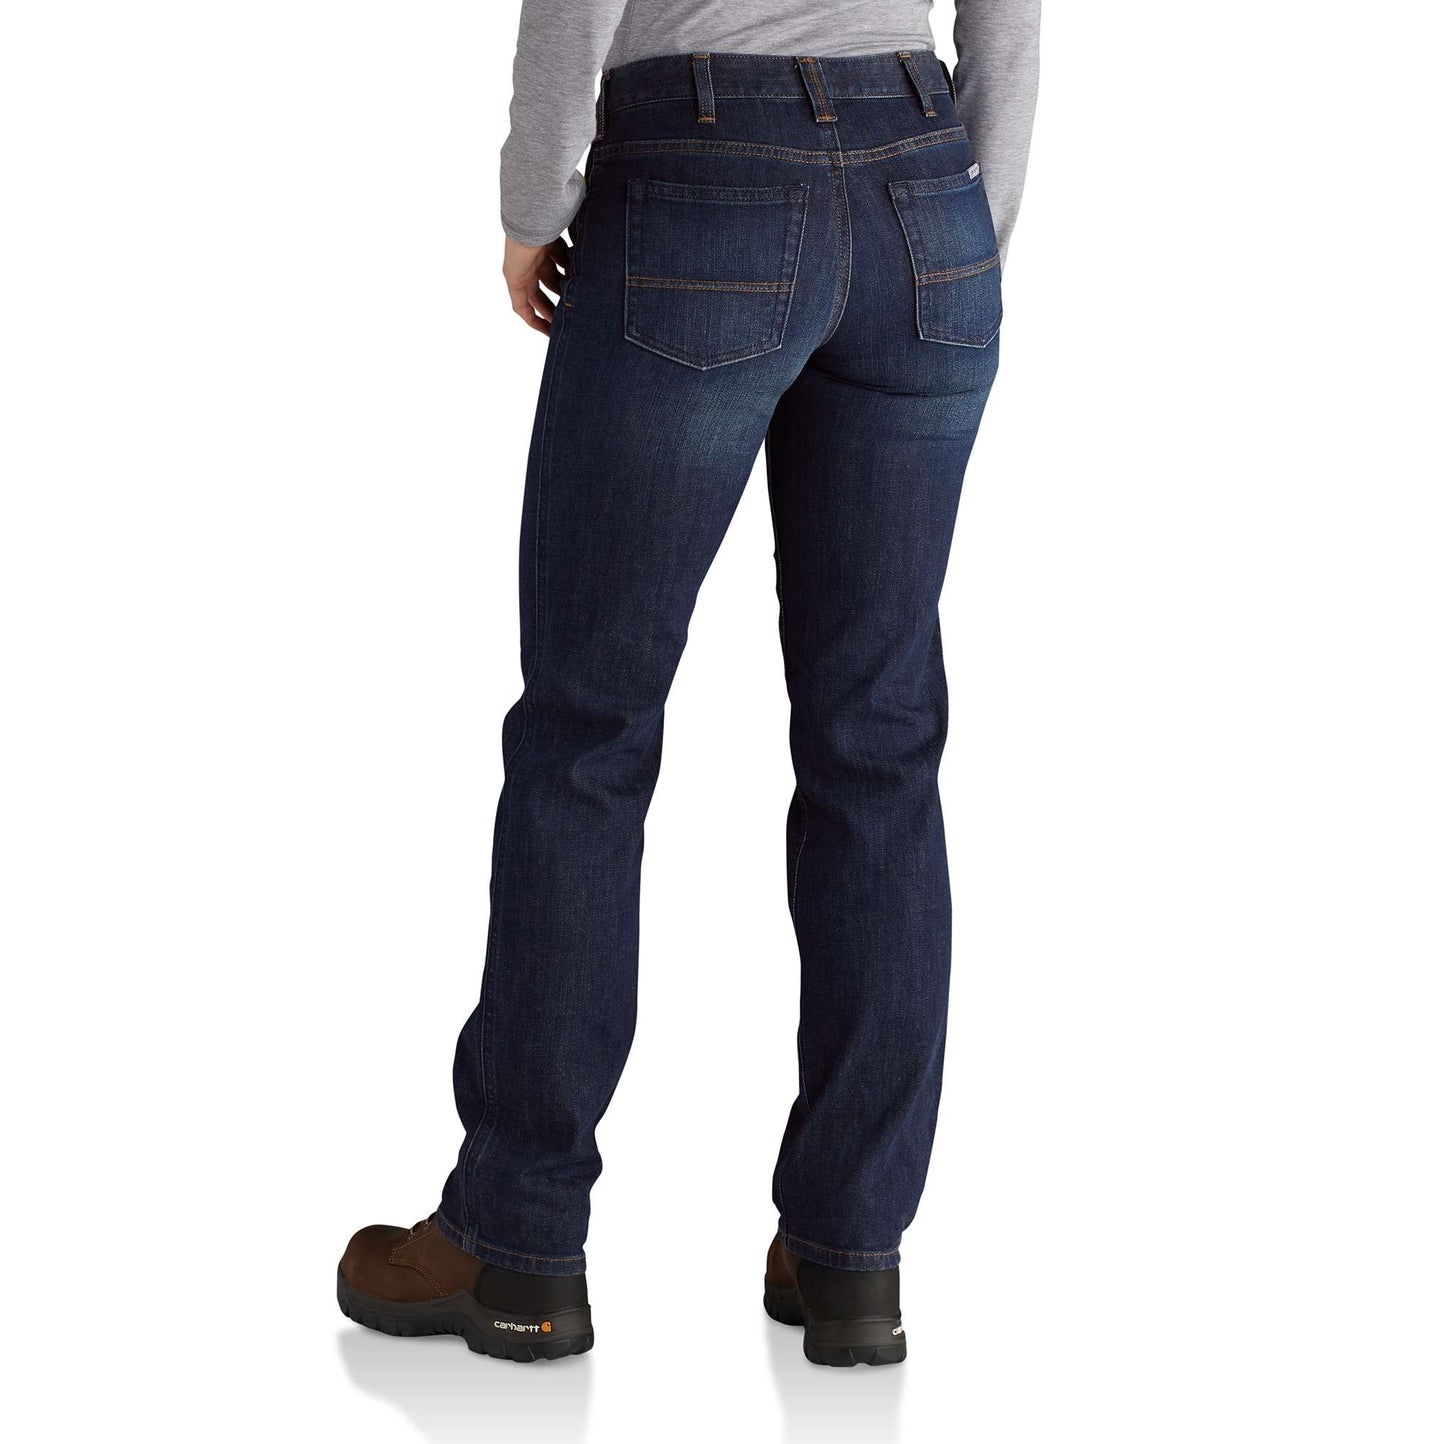 Carhartt Women's Original Fit Blaine Flannel Lined Jeans